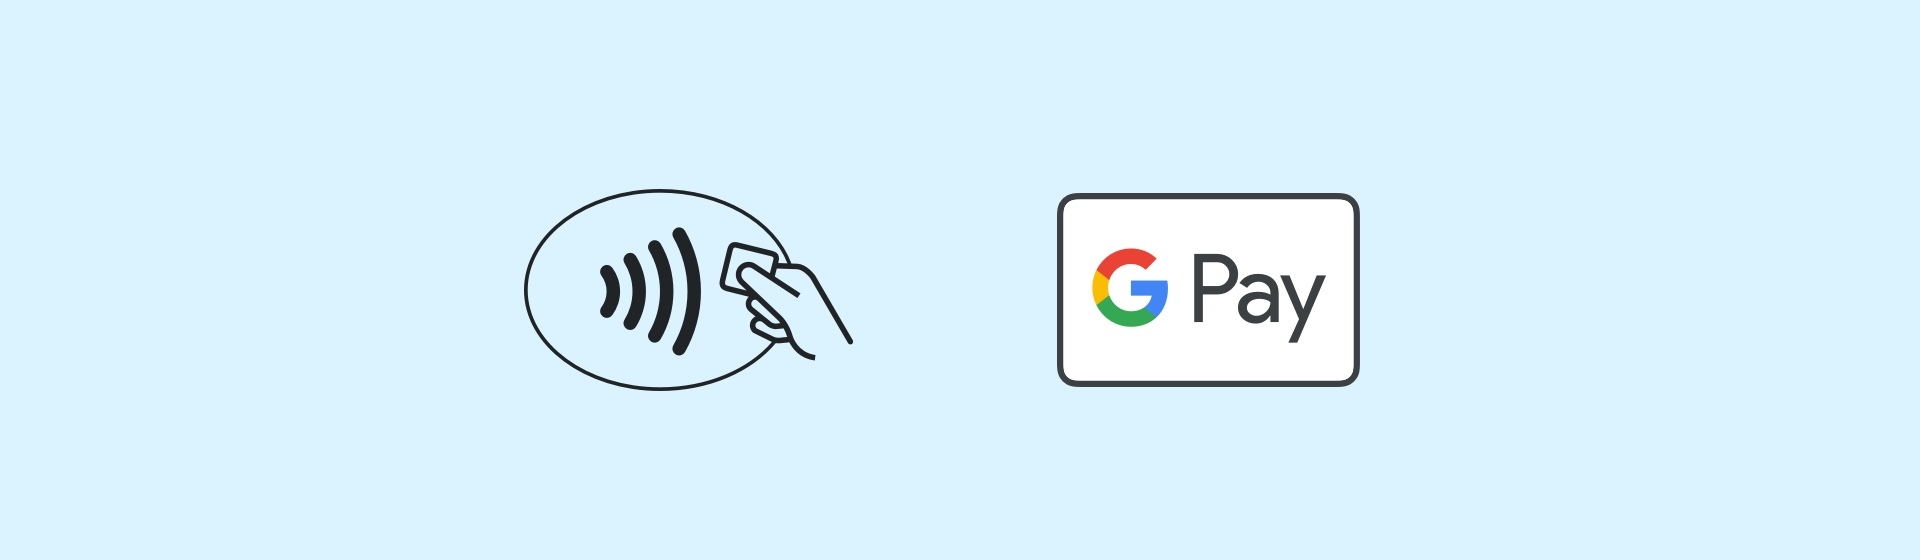 Google-Pay-logo-contactless